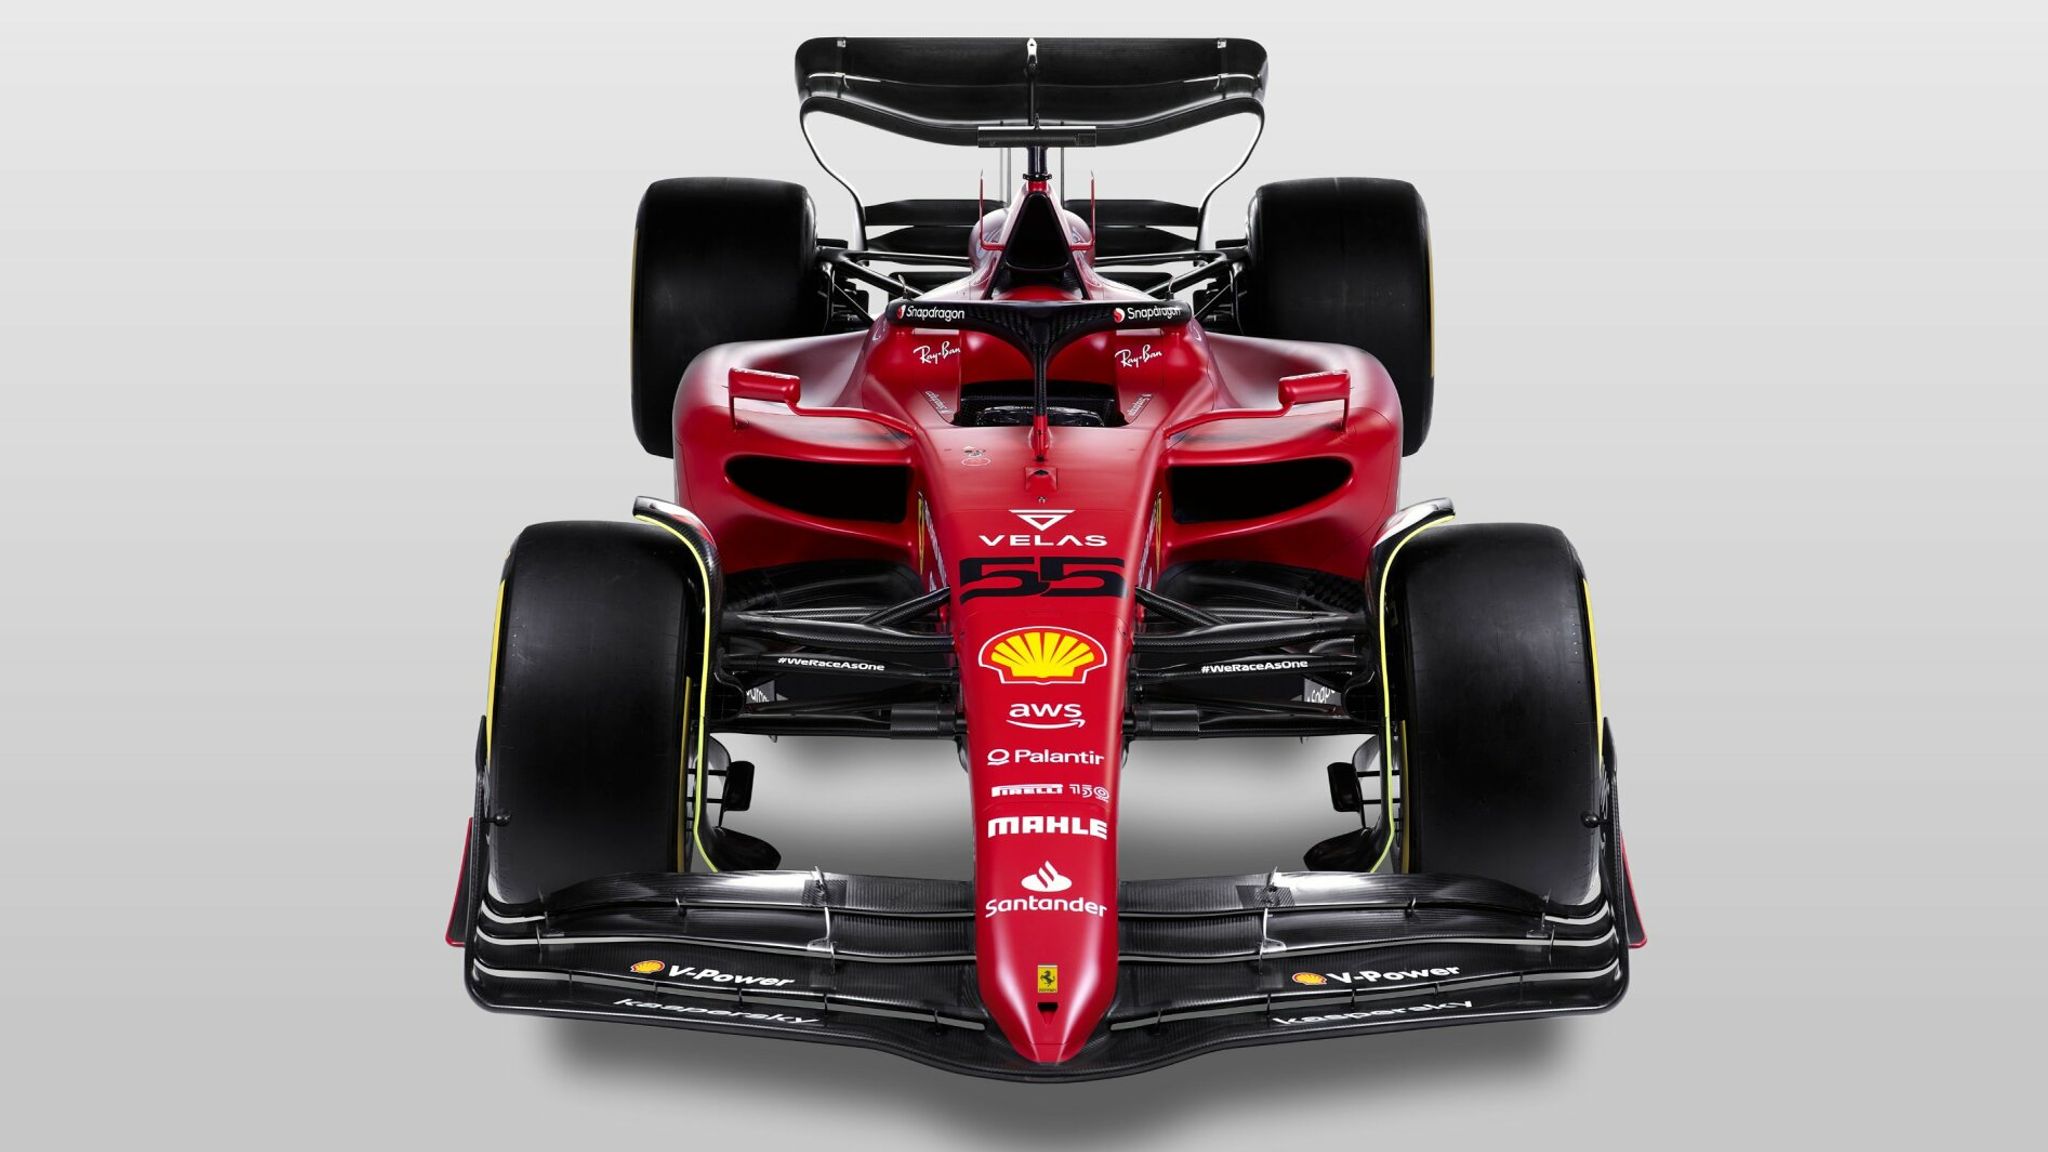 Alpine's new Formula 1 car is quite gorgeous